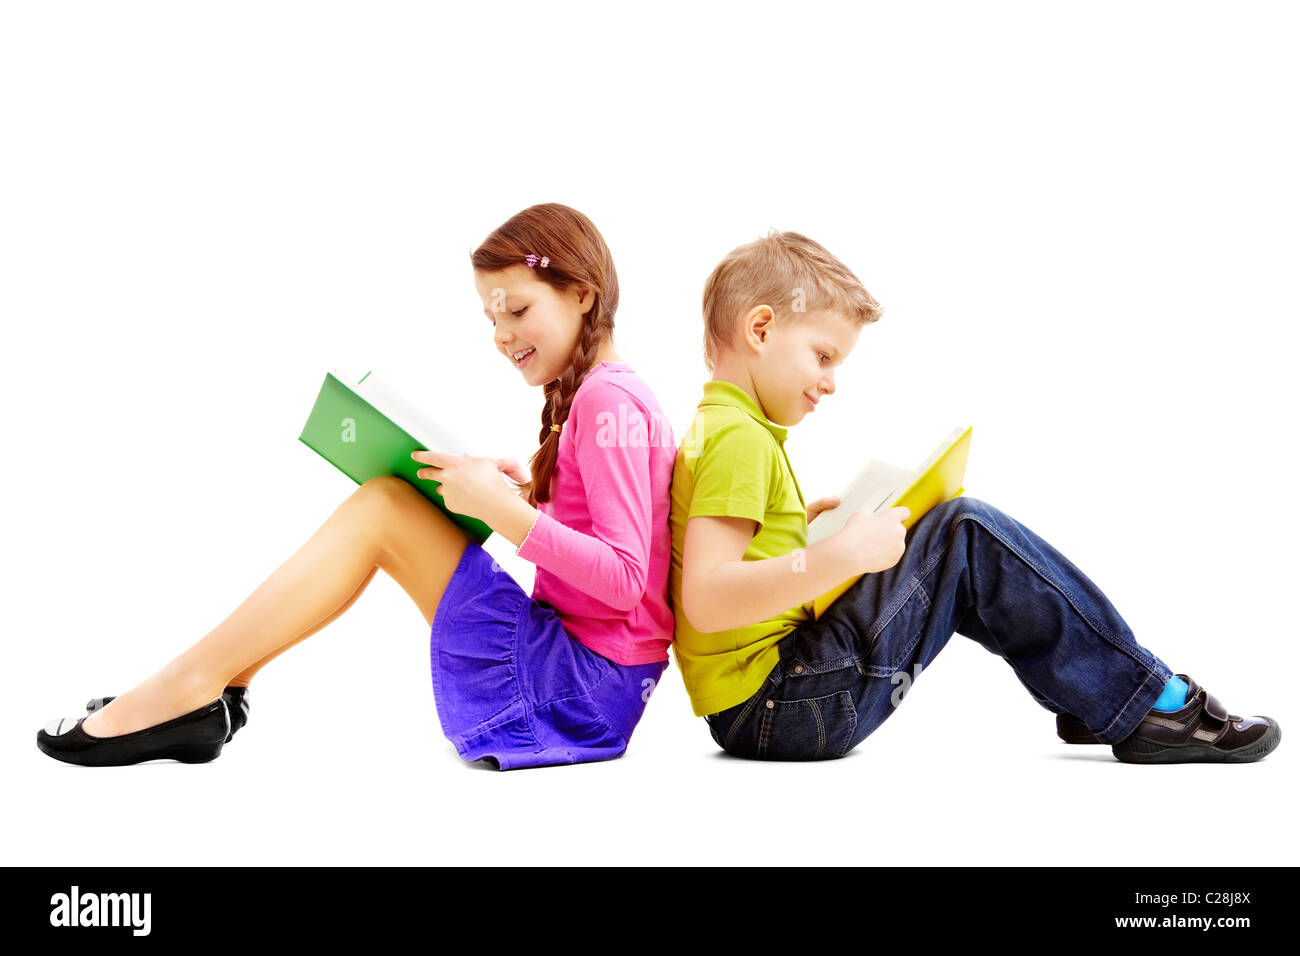 My sister to read books. Дети сидят спина к спине. Мальчик девочка спина к спине. Мальчик и девочка сидят спина к спине. Школьник спиной на белом фоне.